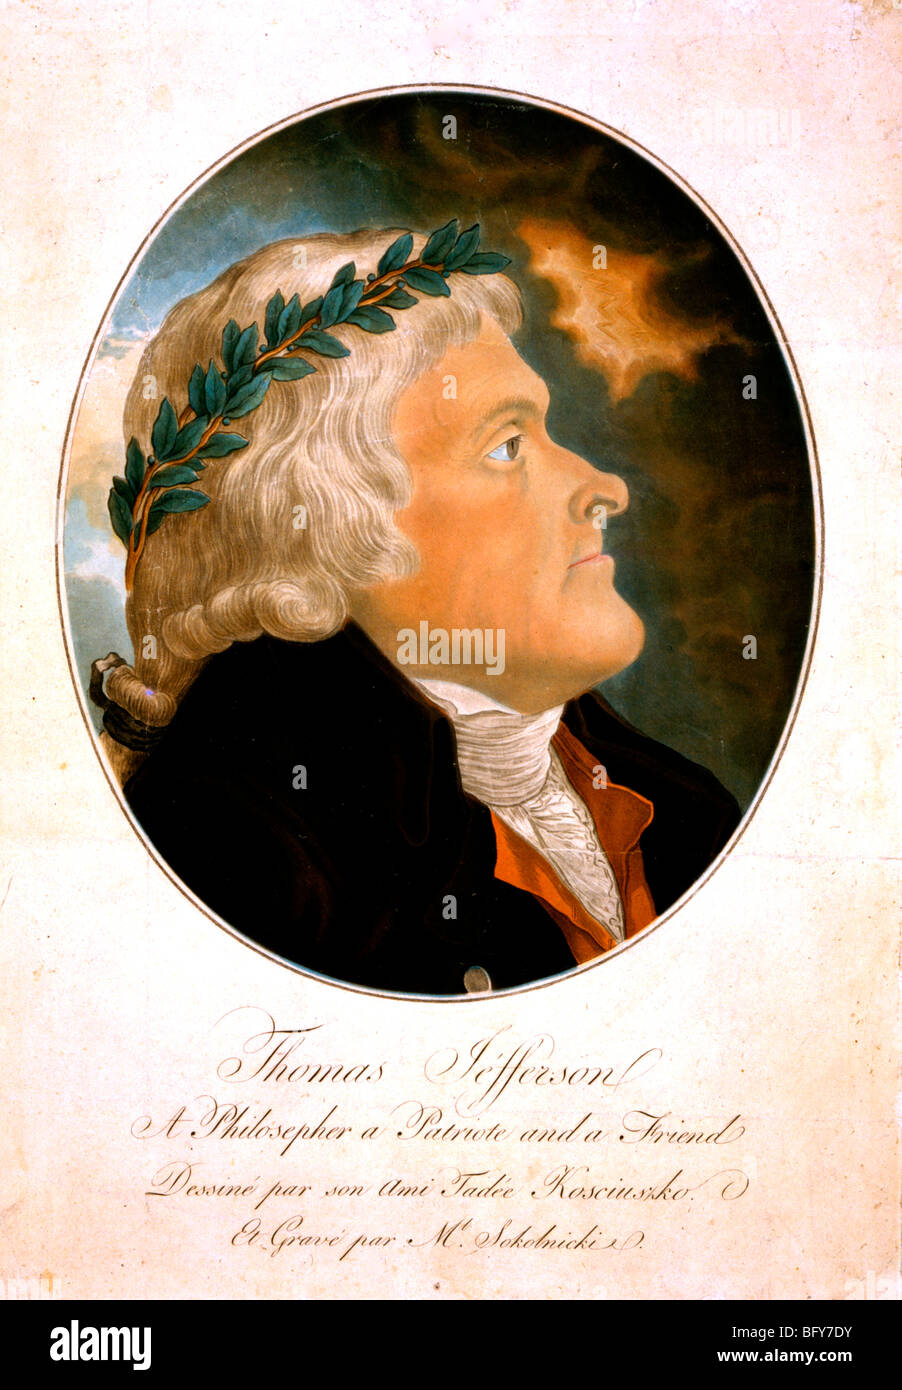 Thomas Jefferson, a philosopher, a patriot and a friend, bust portrait, right profile, wearing laurel crown Stock Photo